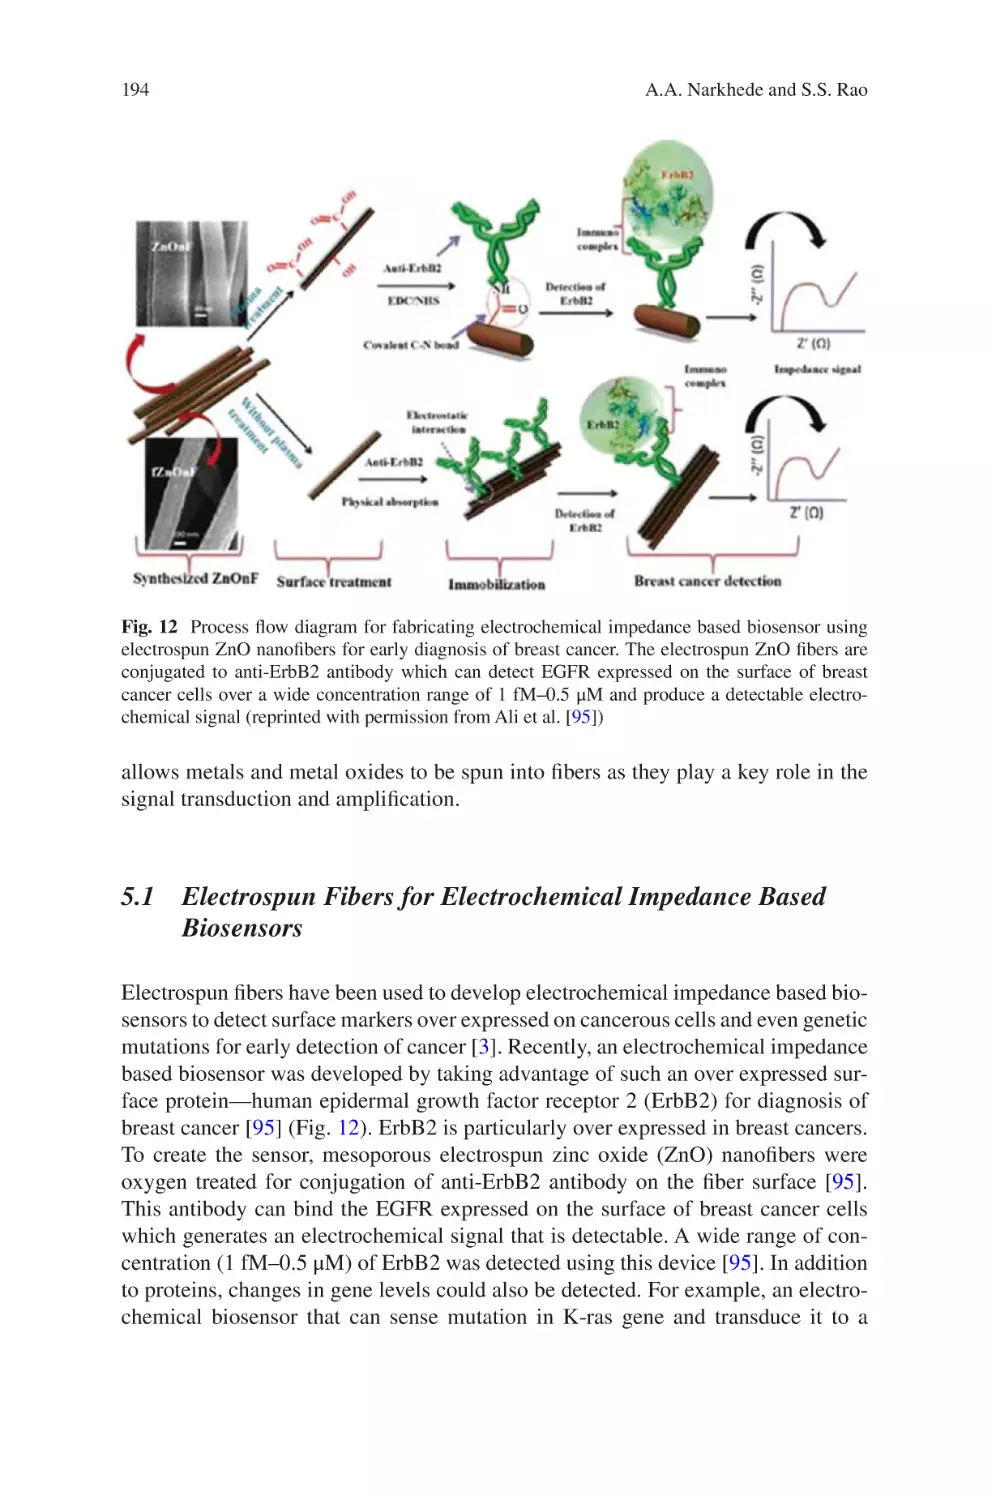 5.1 Electrospun Fibers for Electrochemical Impedance Based Biosensors